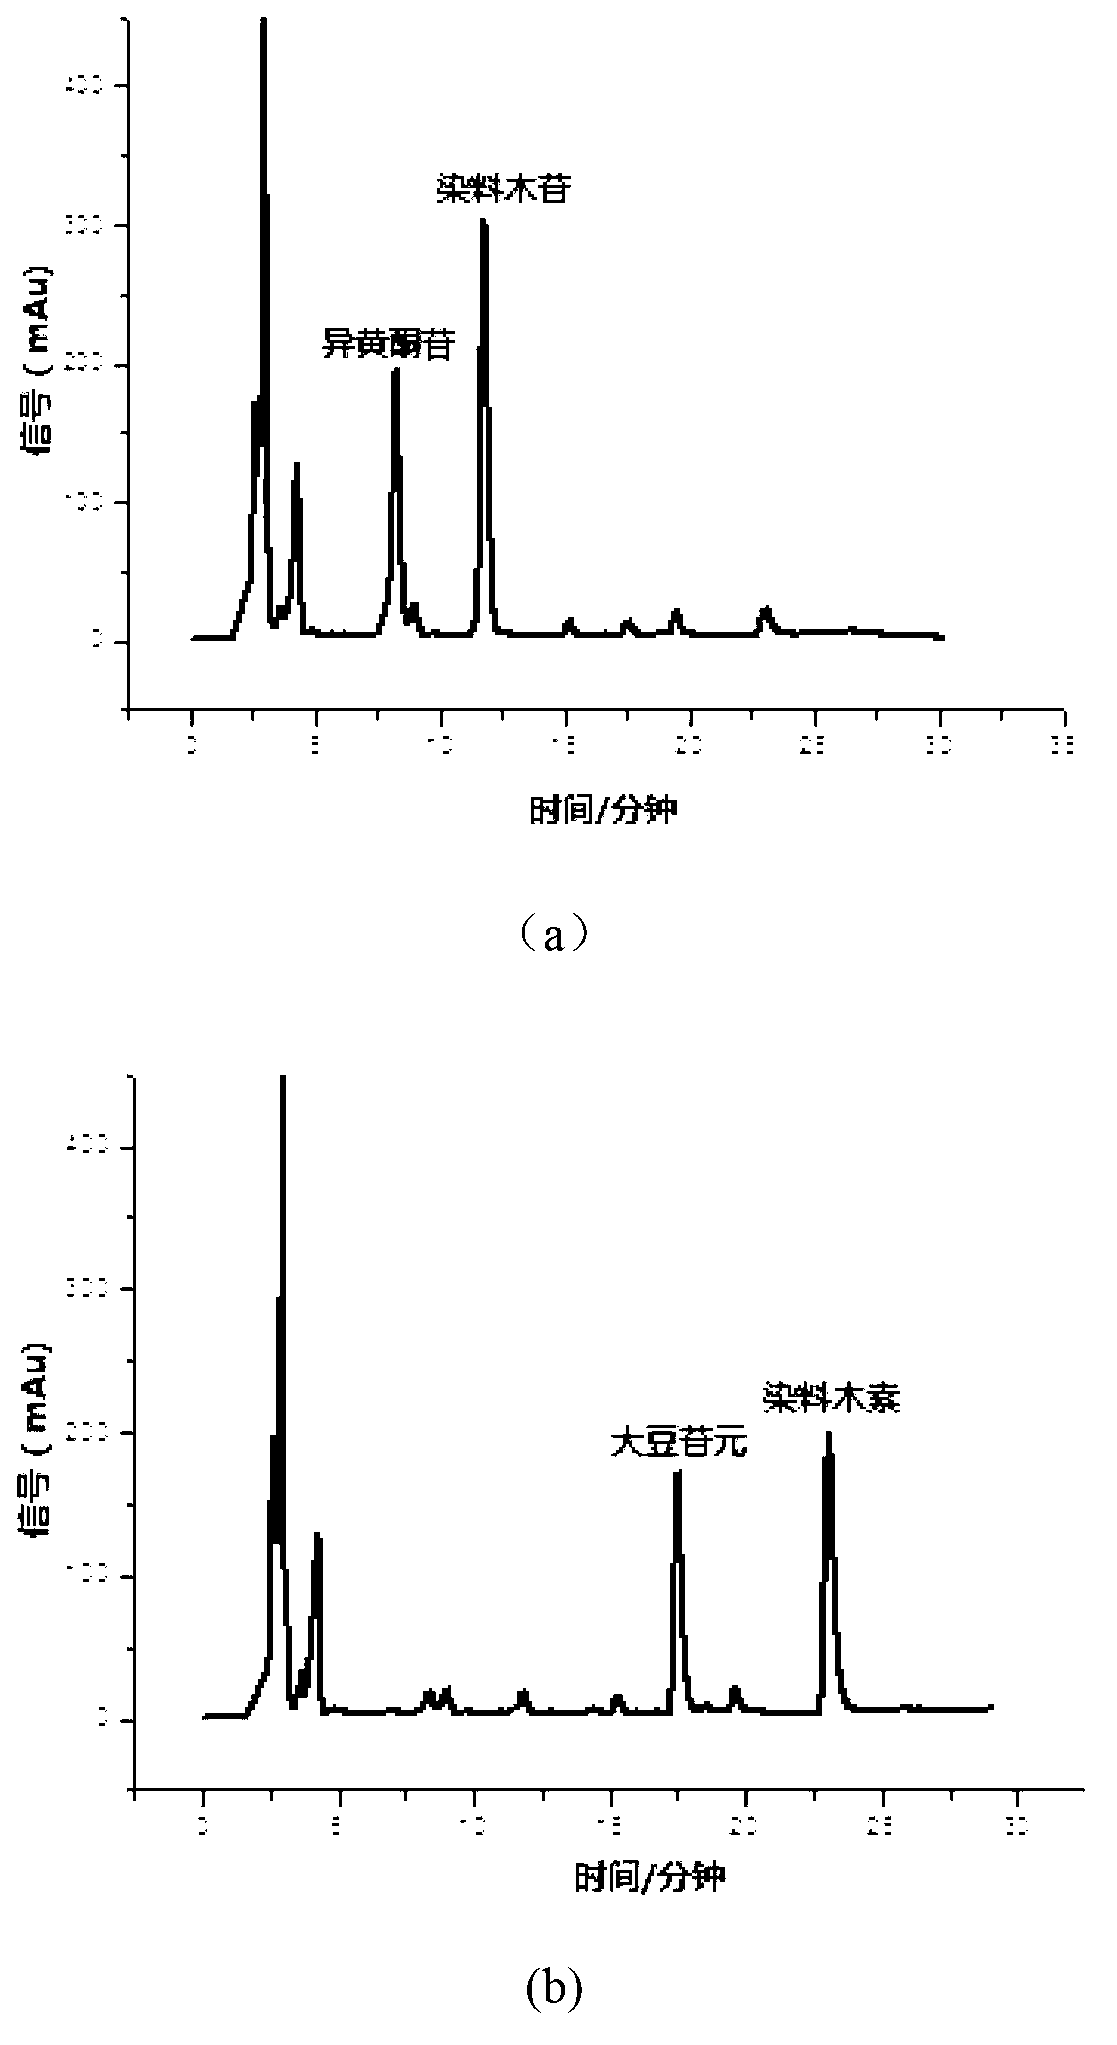 Production method of soybean isoflavone glycoside